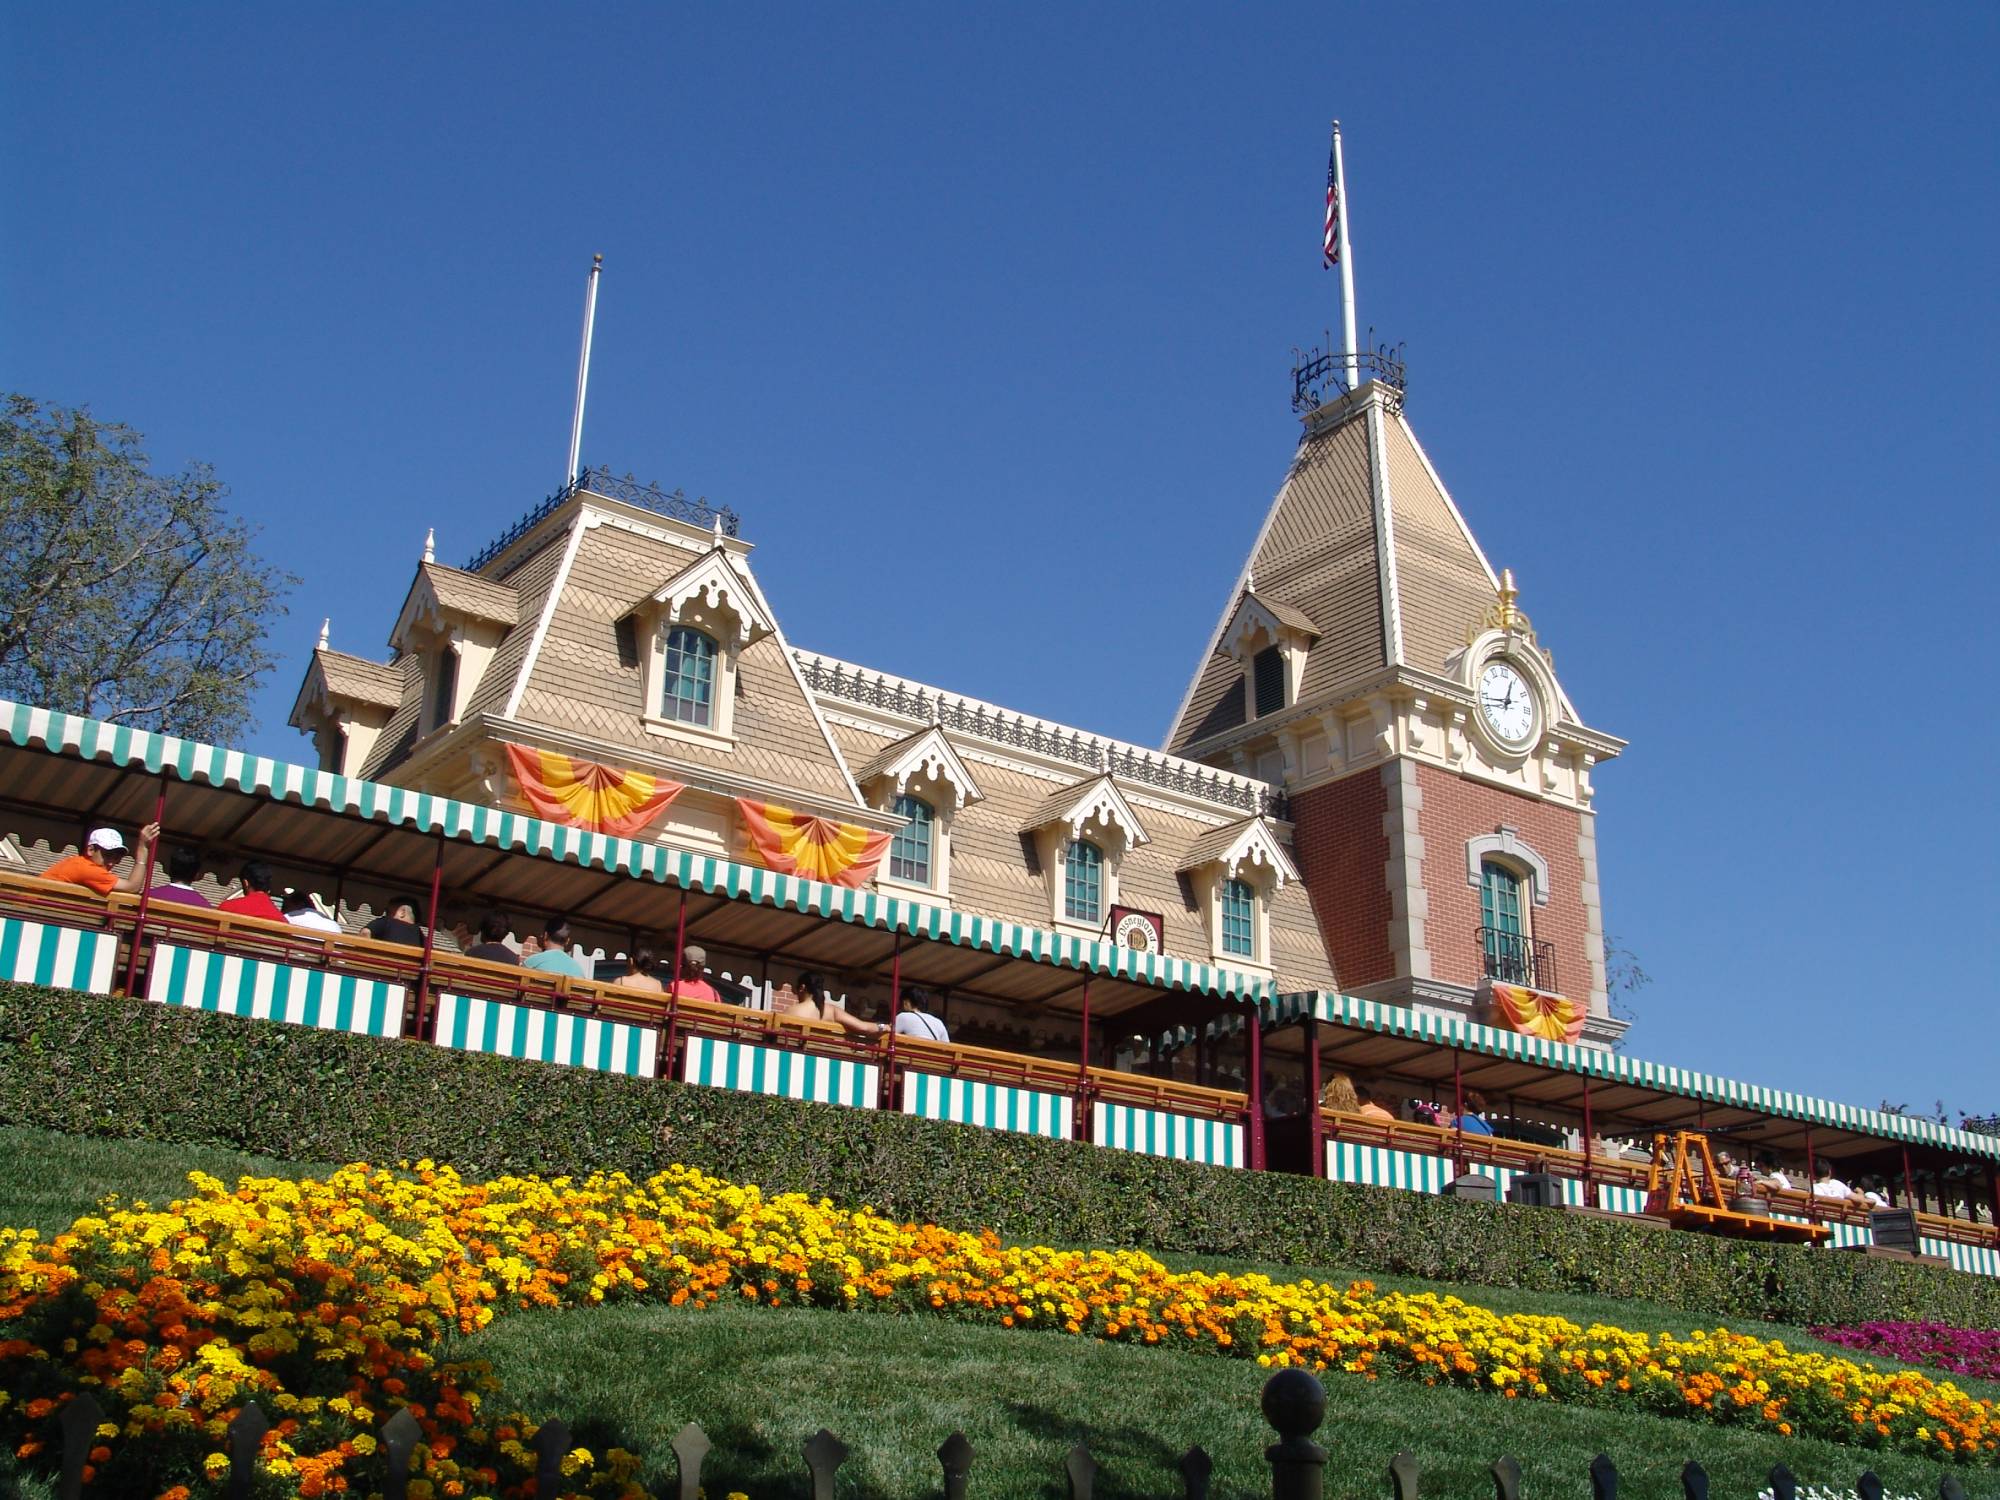 Disneyland - Railroad station at Main Street